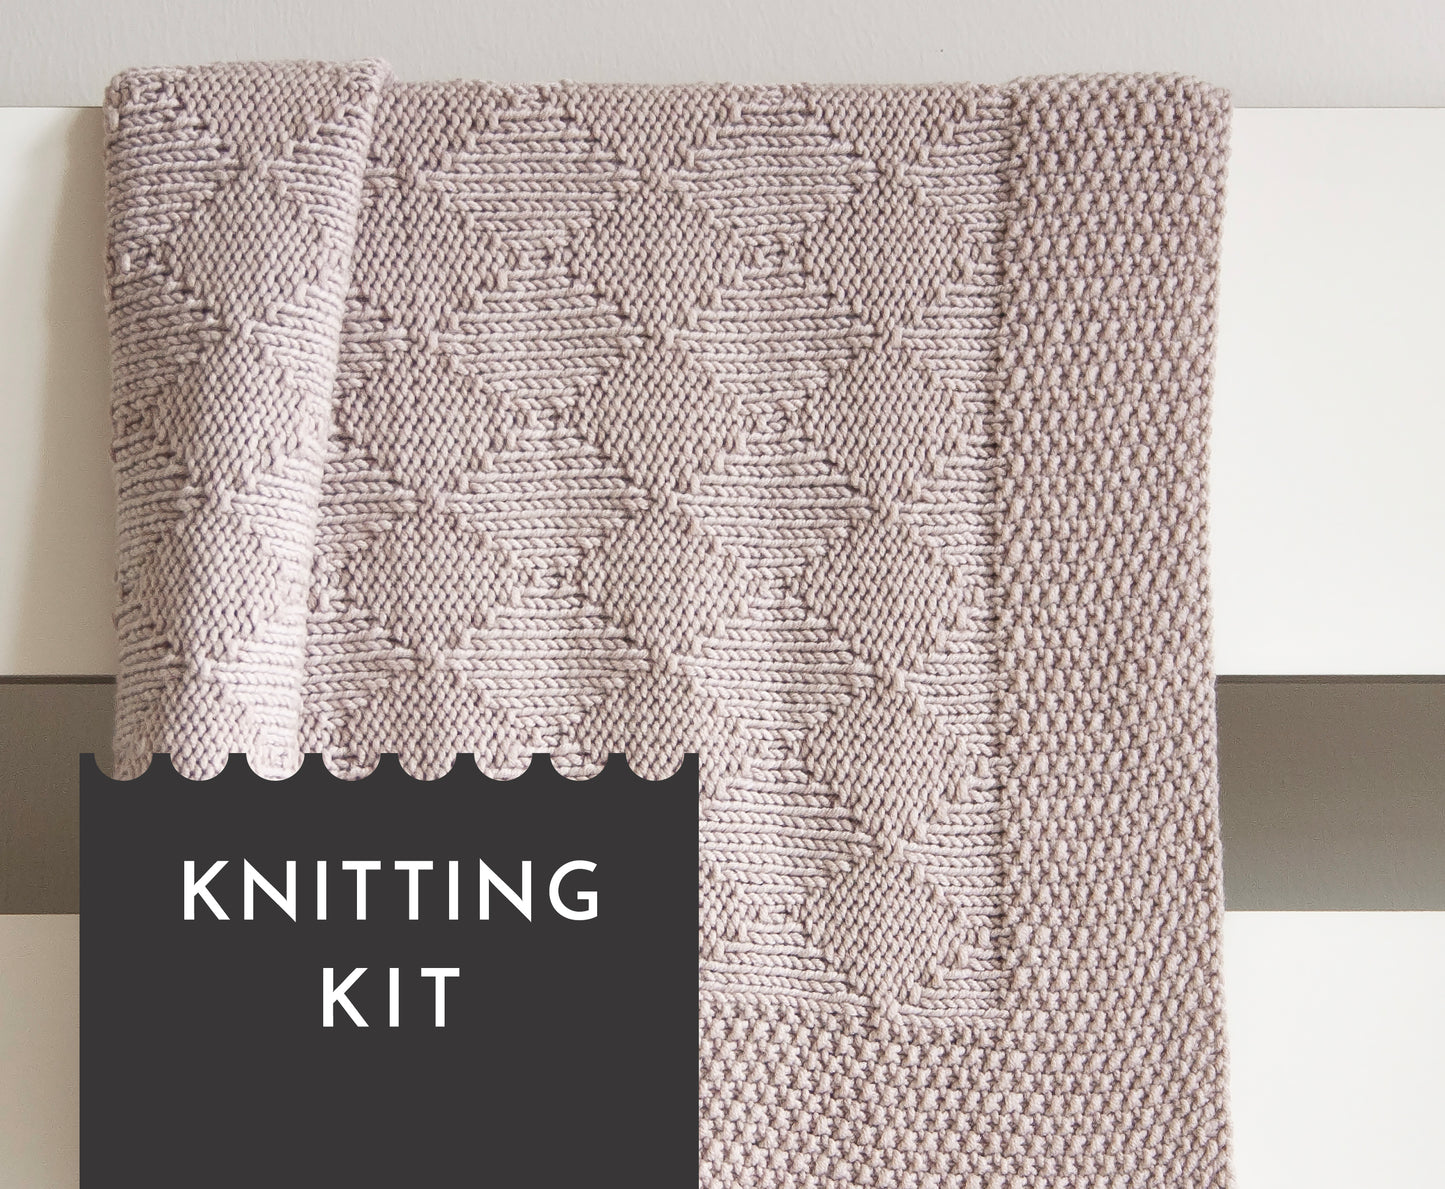 Beige superwash merino wool DK yarn hand-knitted baby blanket in Harlequin knitting pattern